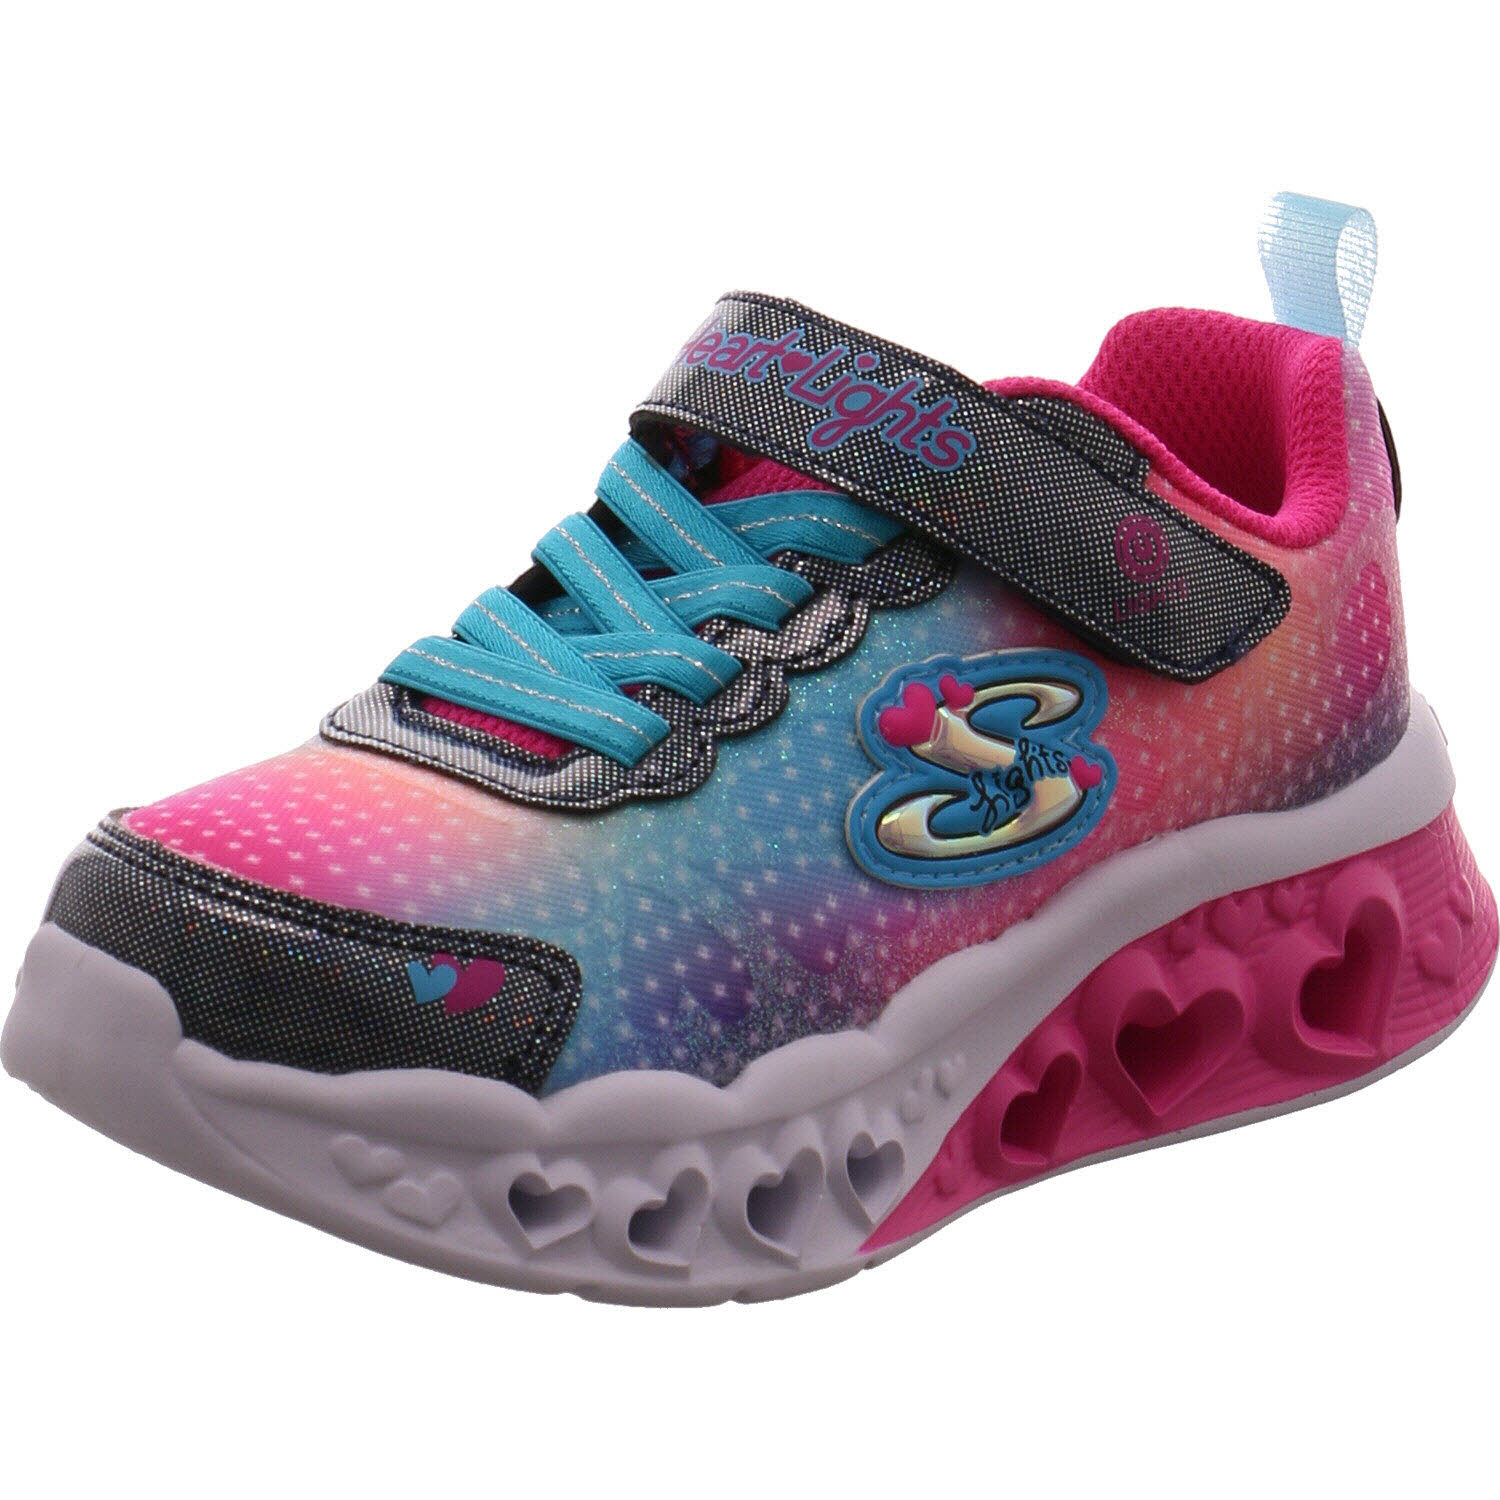 Skechers Sneaker low S Lights Flutter Heart Lights Simply Love Pink/blau/weiß für Mädchen